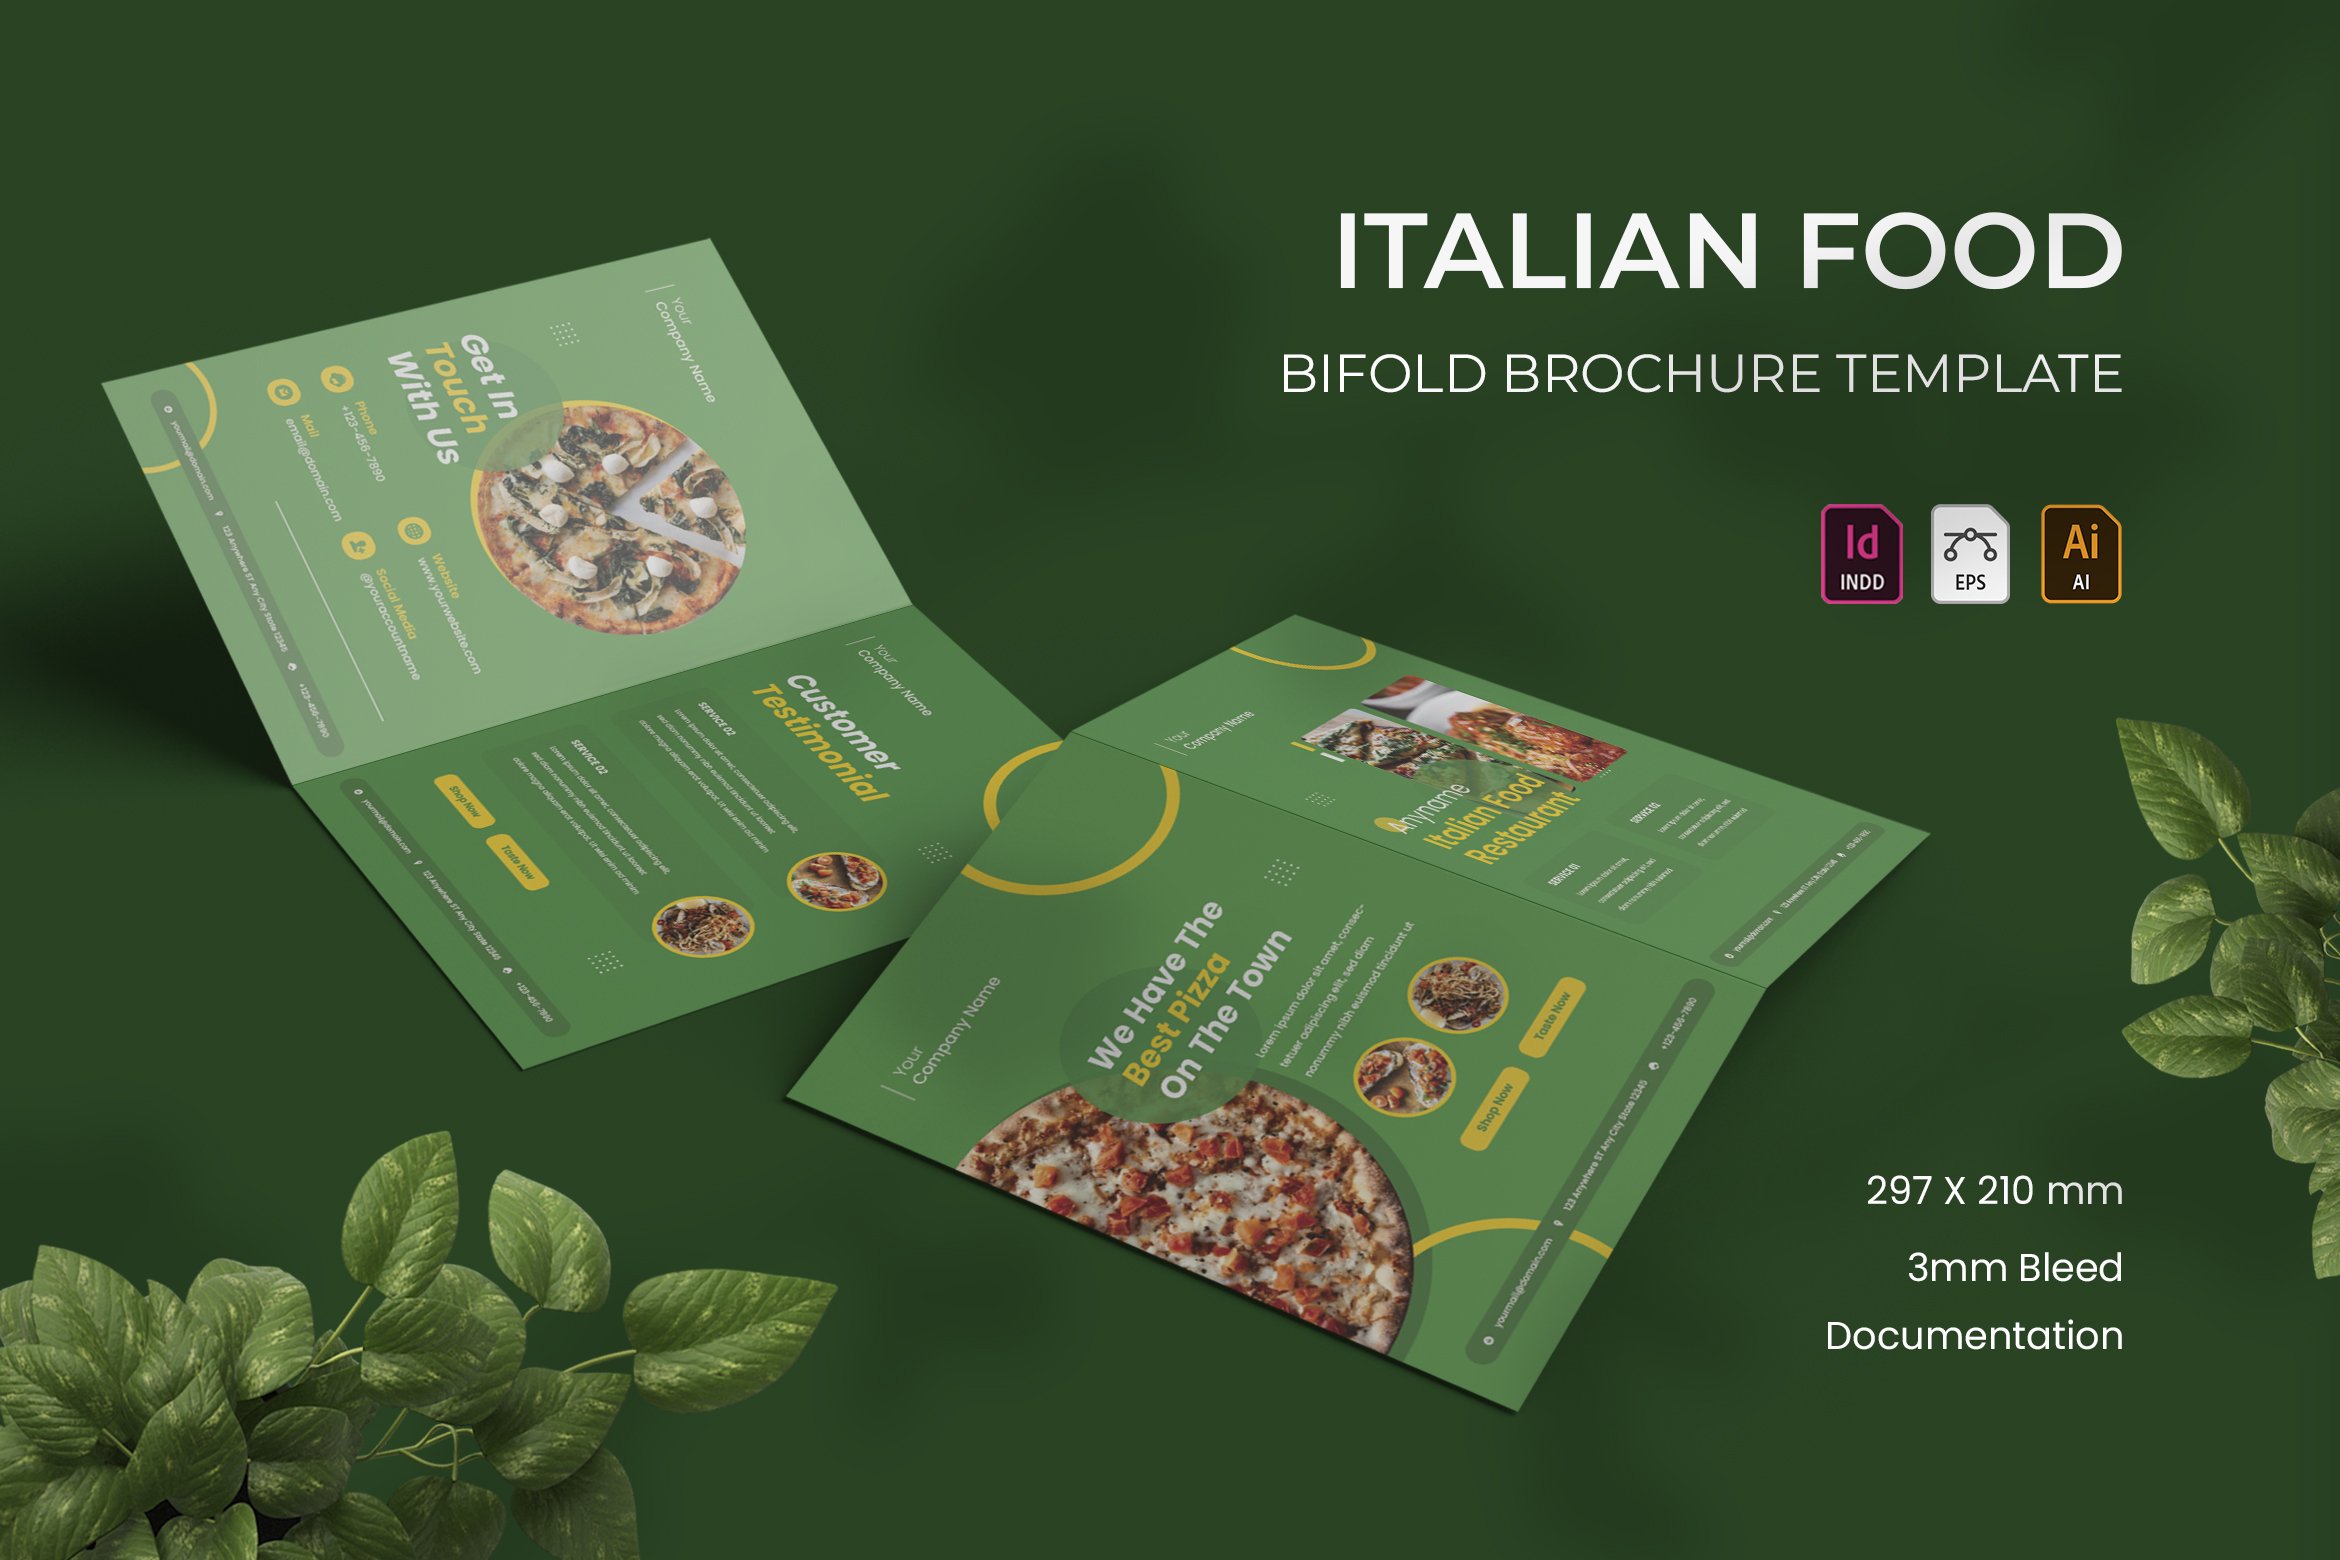 Italian Food - Bifold Brochure cover image.